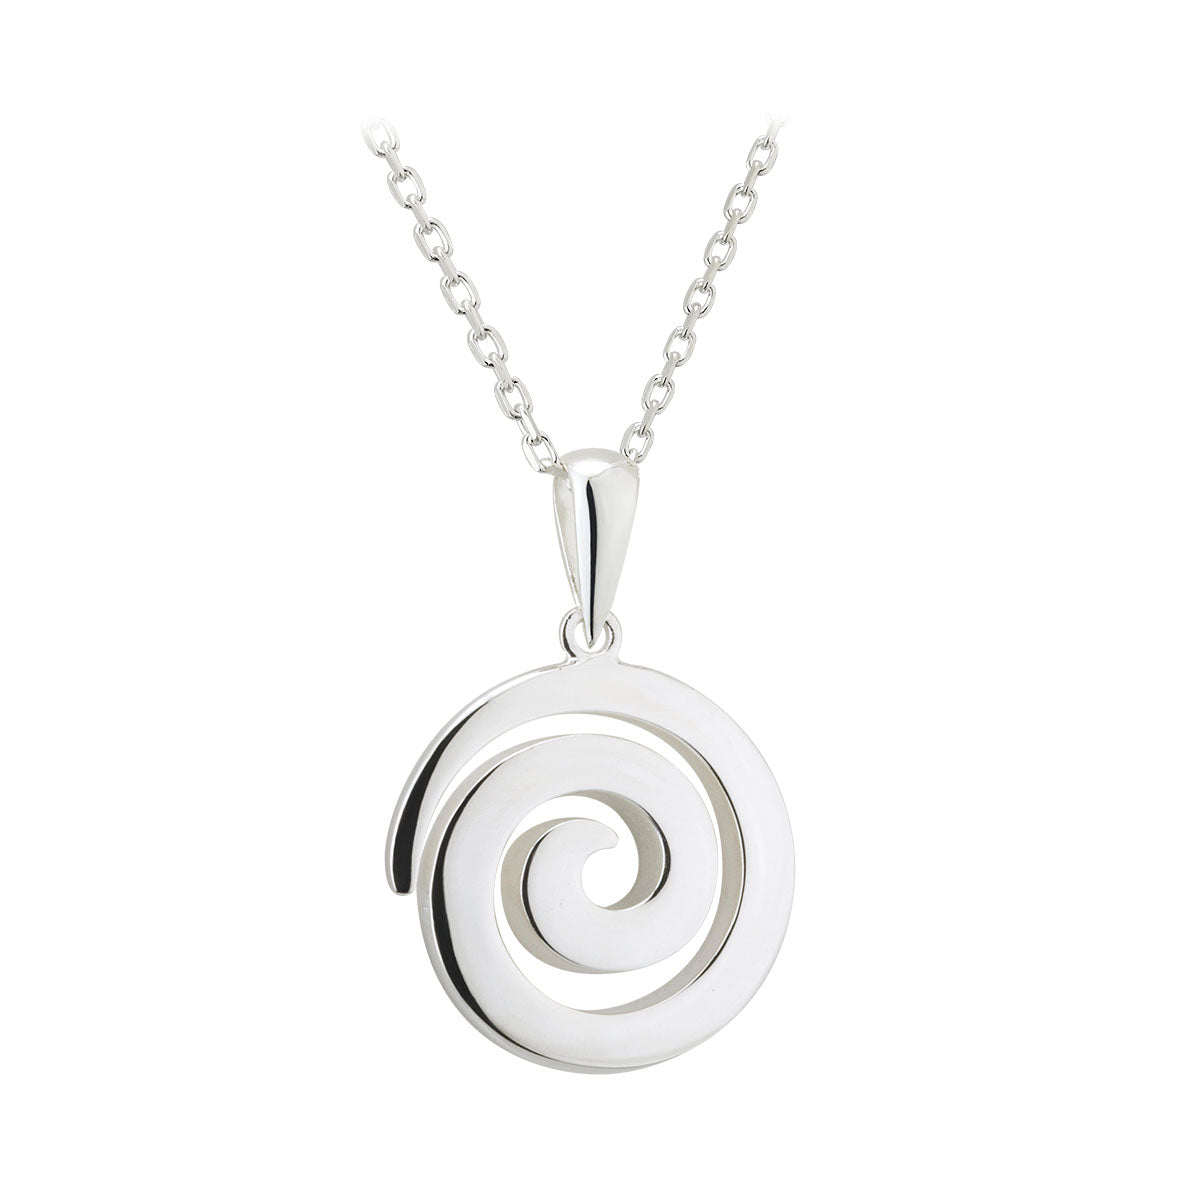 sterling silver spiral pendant s46361 from Solvar